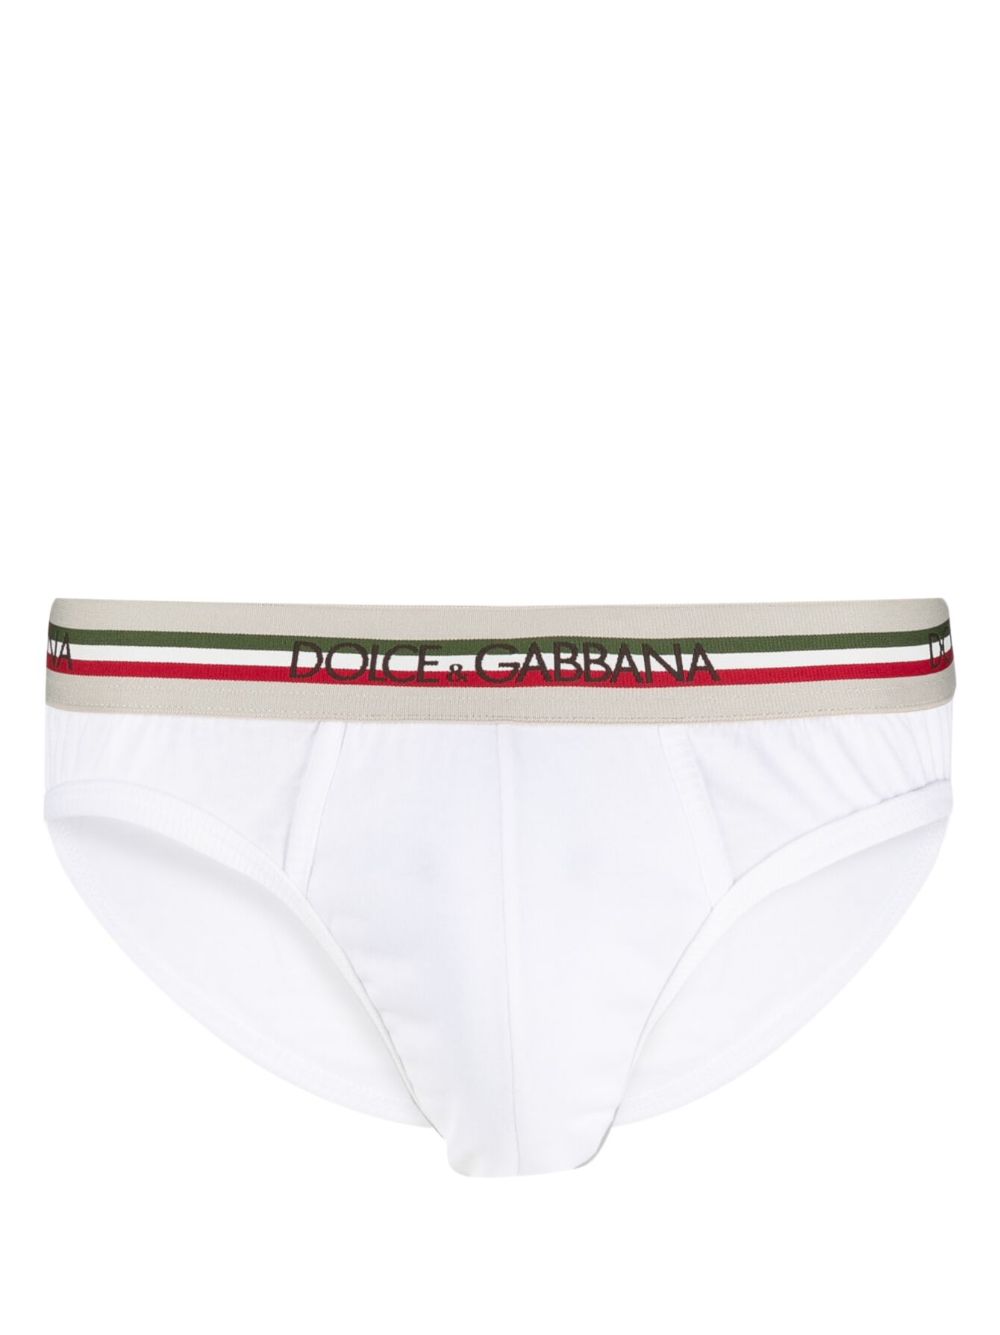 Dolce & Gabbana logo-waistband Cotton Briefs - Farfetch